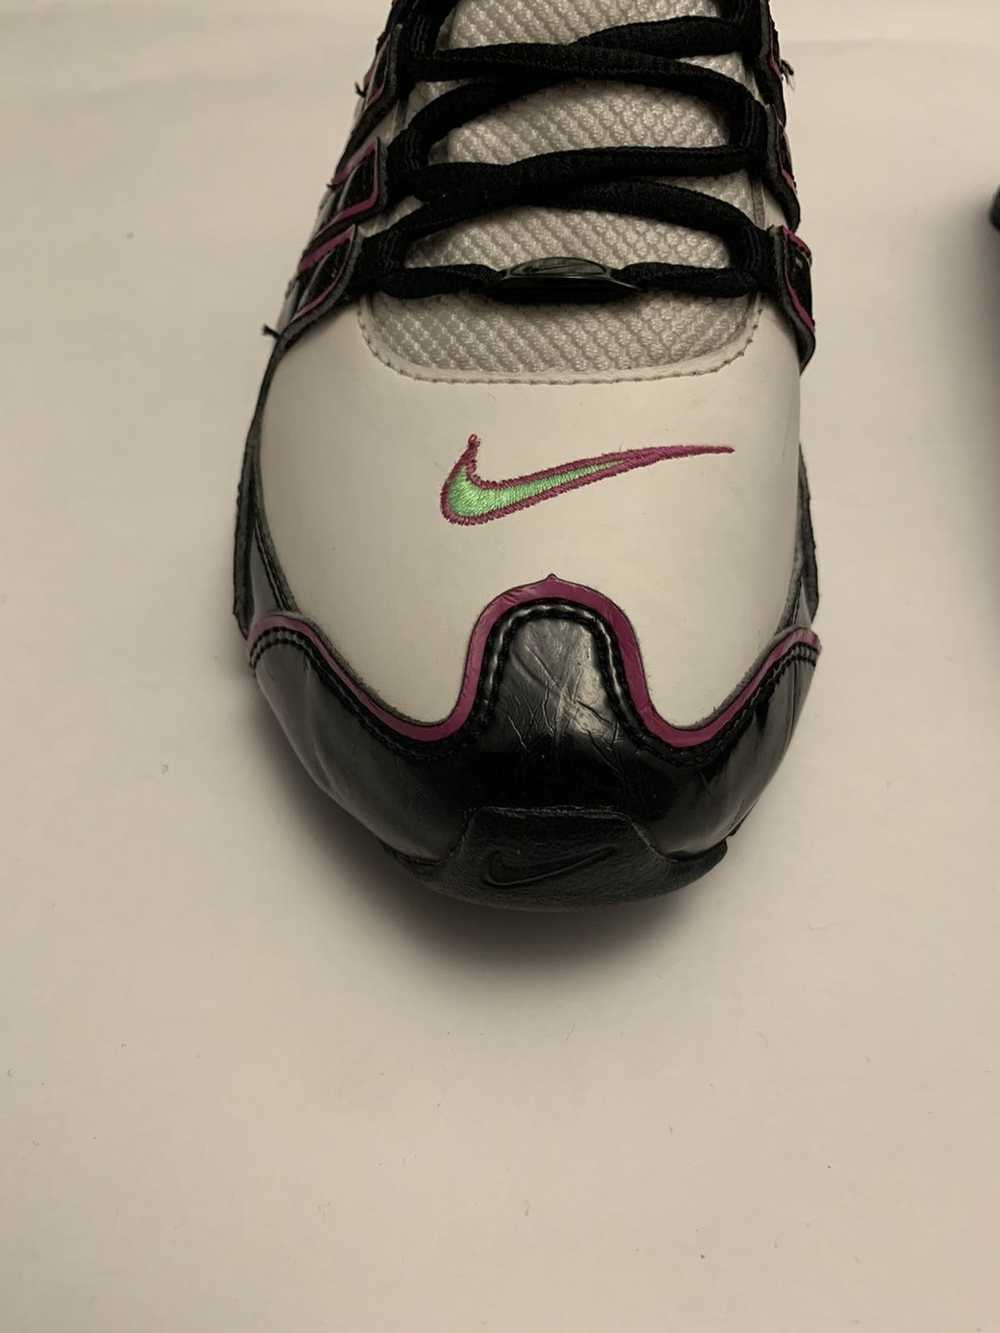 Nike Nike shox 2007 rare colorway - image 5